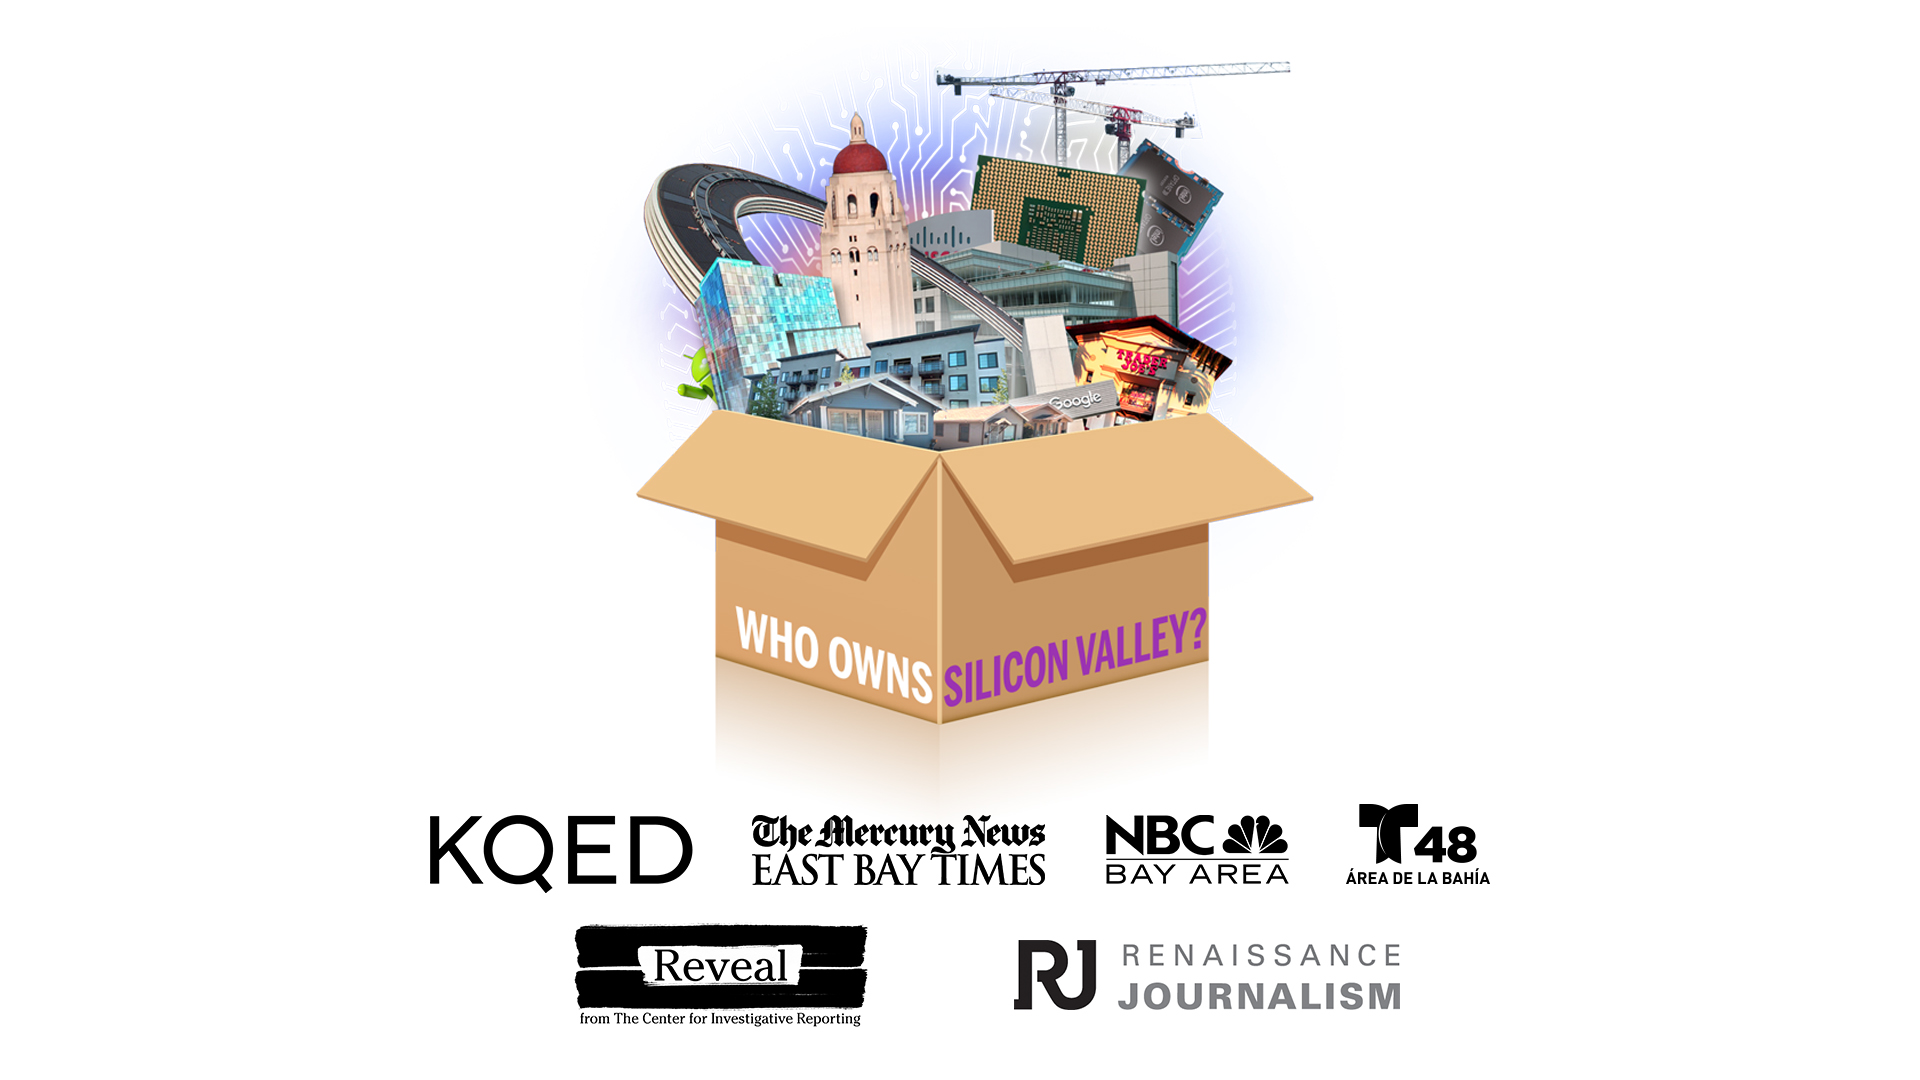 "Who Owns Silicon Valley?" is a multi-newsroom investigative project involving Reveal from The Center for Investigative Reporting, The Mercury News, NBC Bay Area, Renaissance Journalism, and Telemundo 48 Área de la BahíaTelemundo.